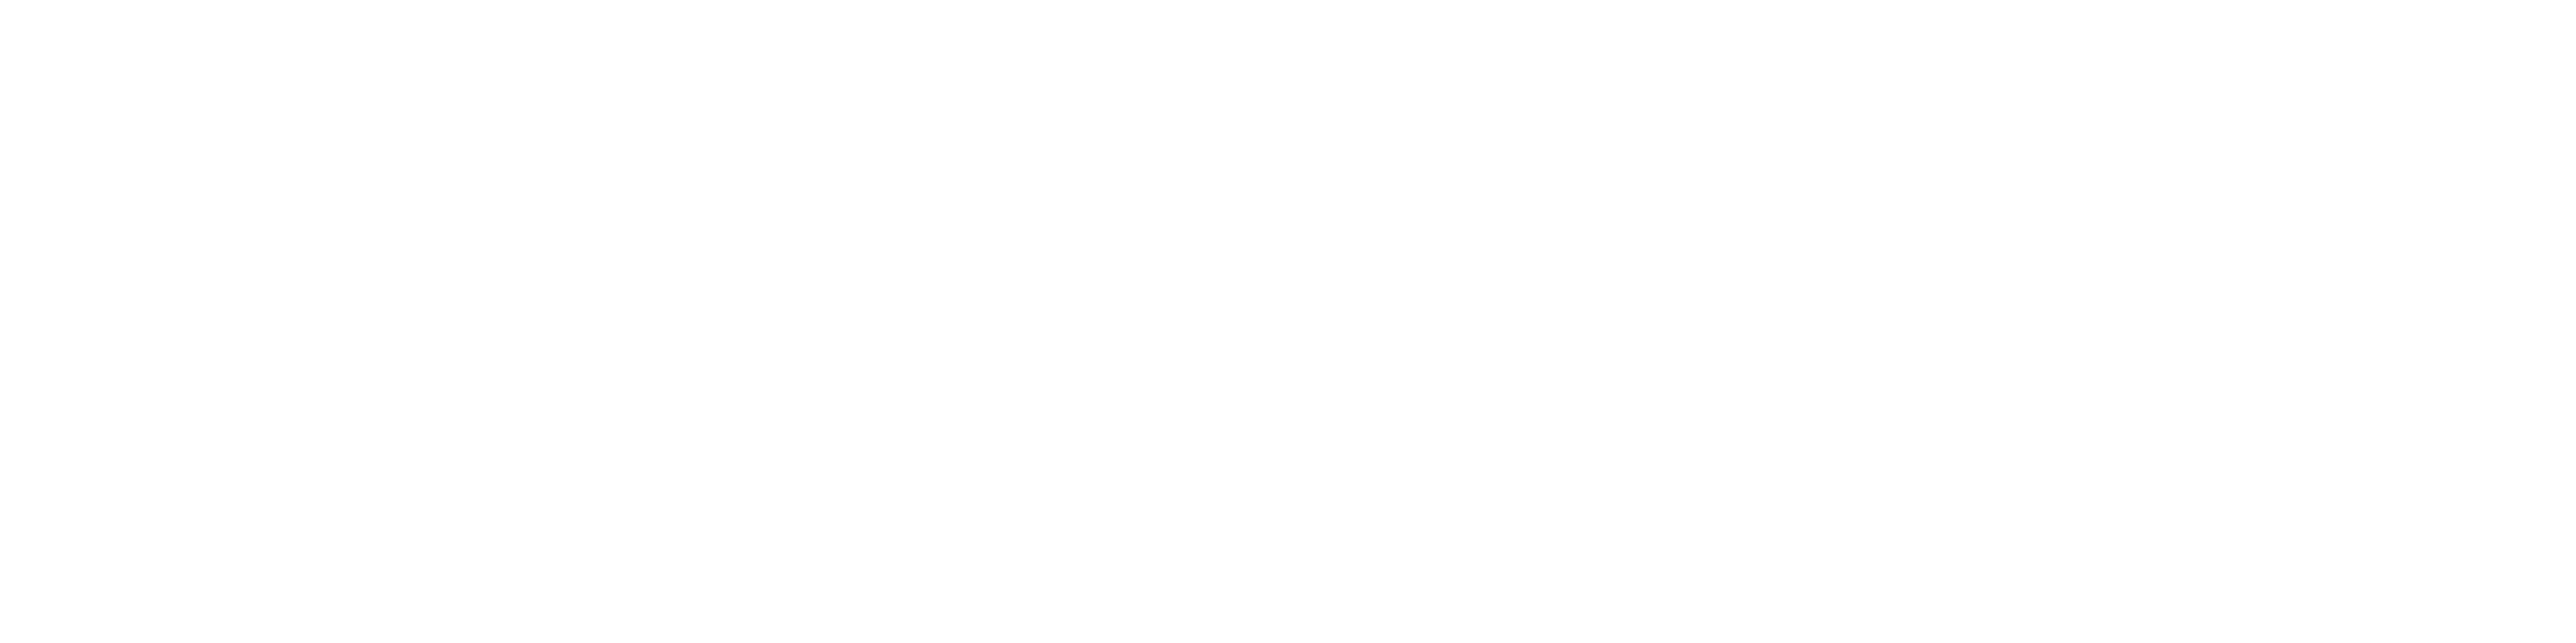 Wallgreens Boots Alliance Esign Customer